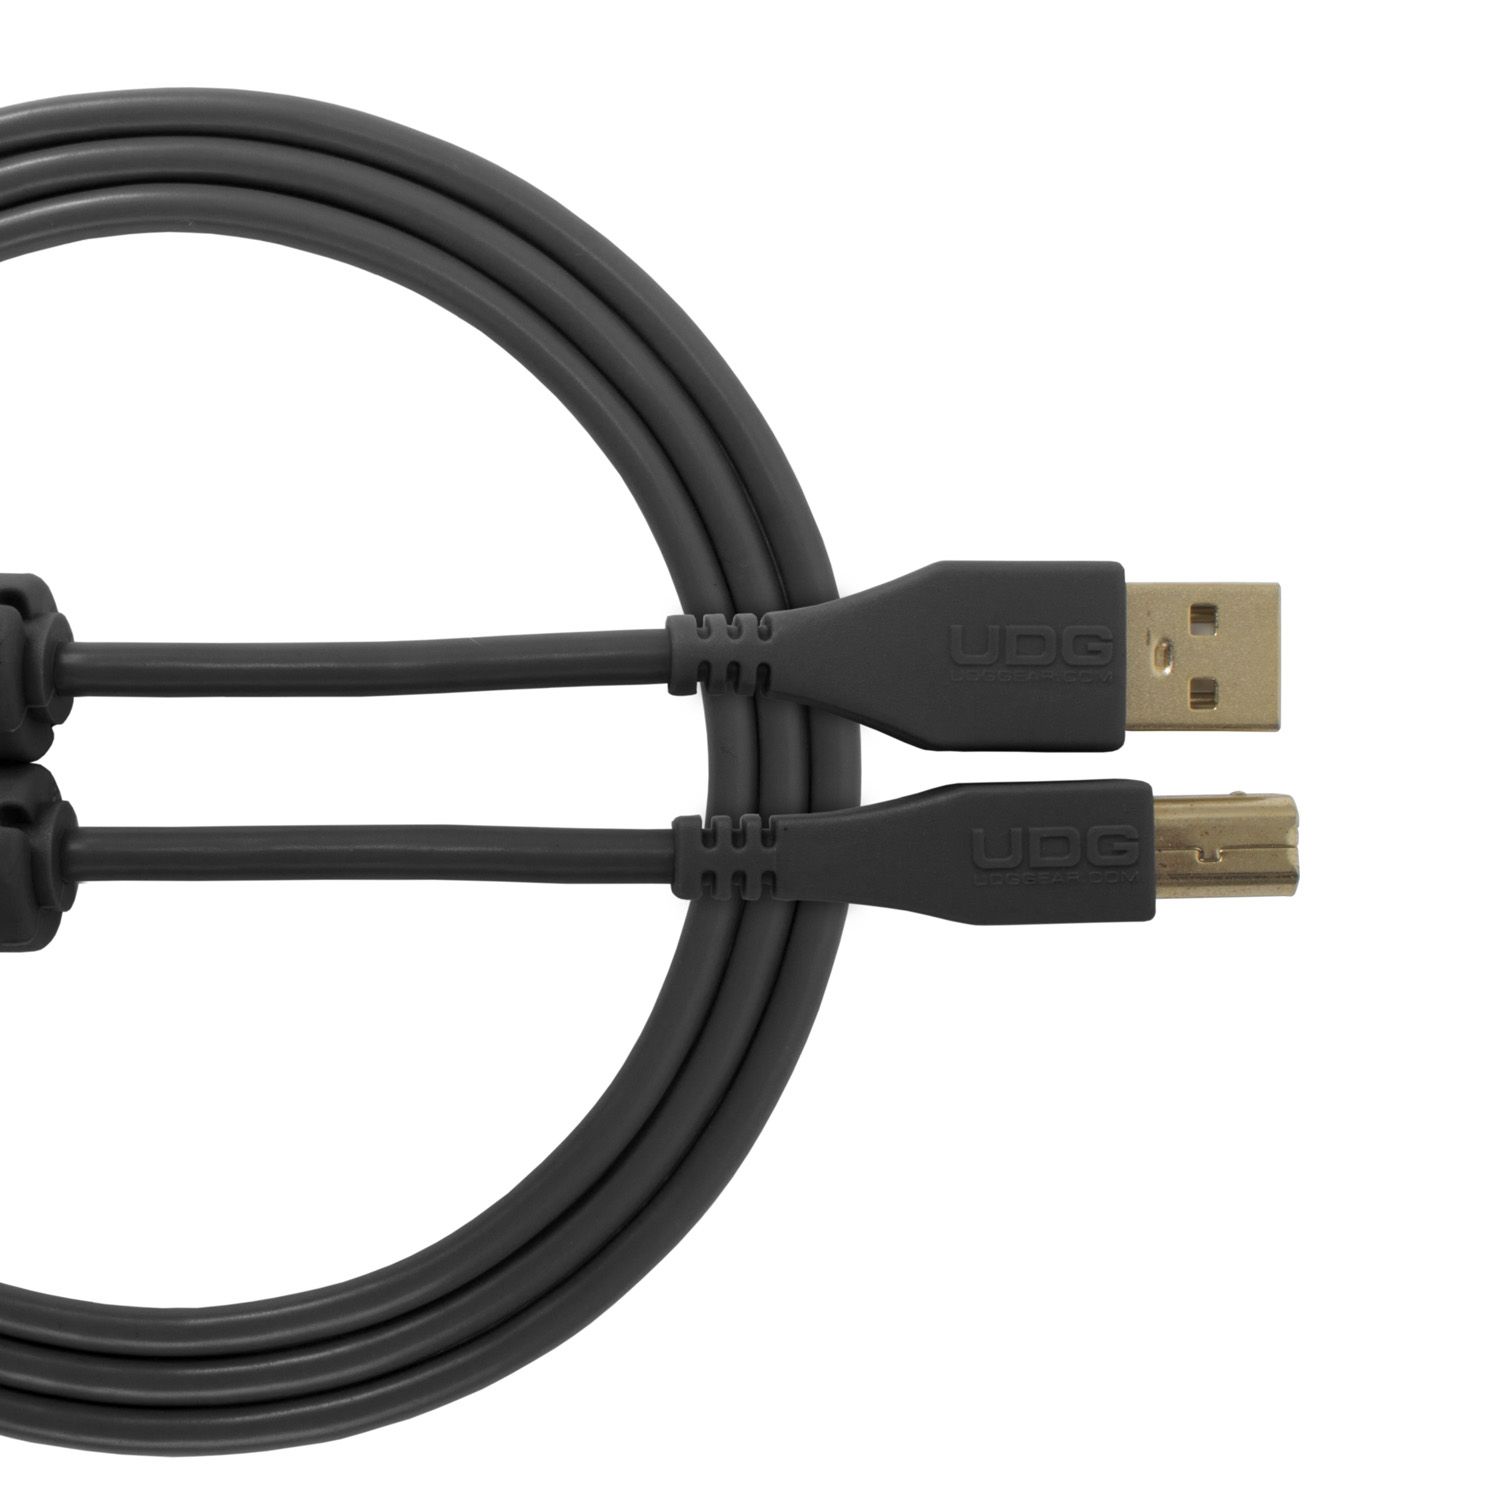 U95001BL UDG AUDIO CABLE USB 2.0 A-B BLACK STRA 1M